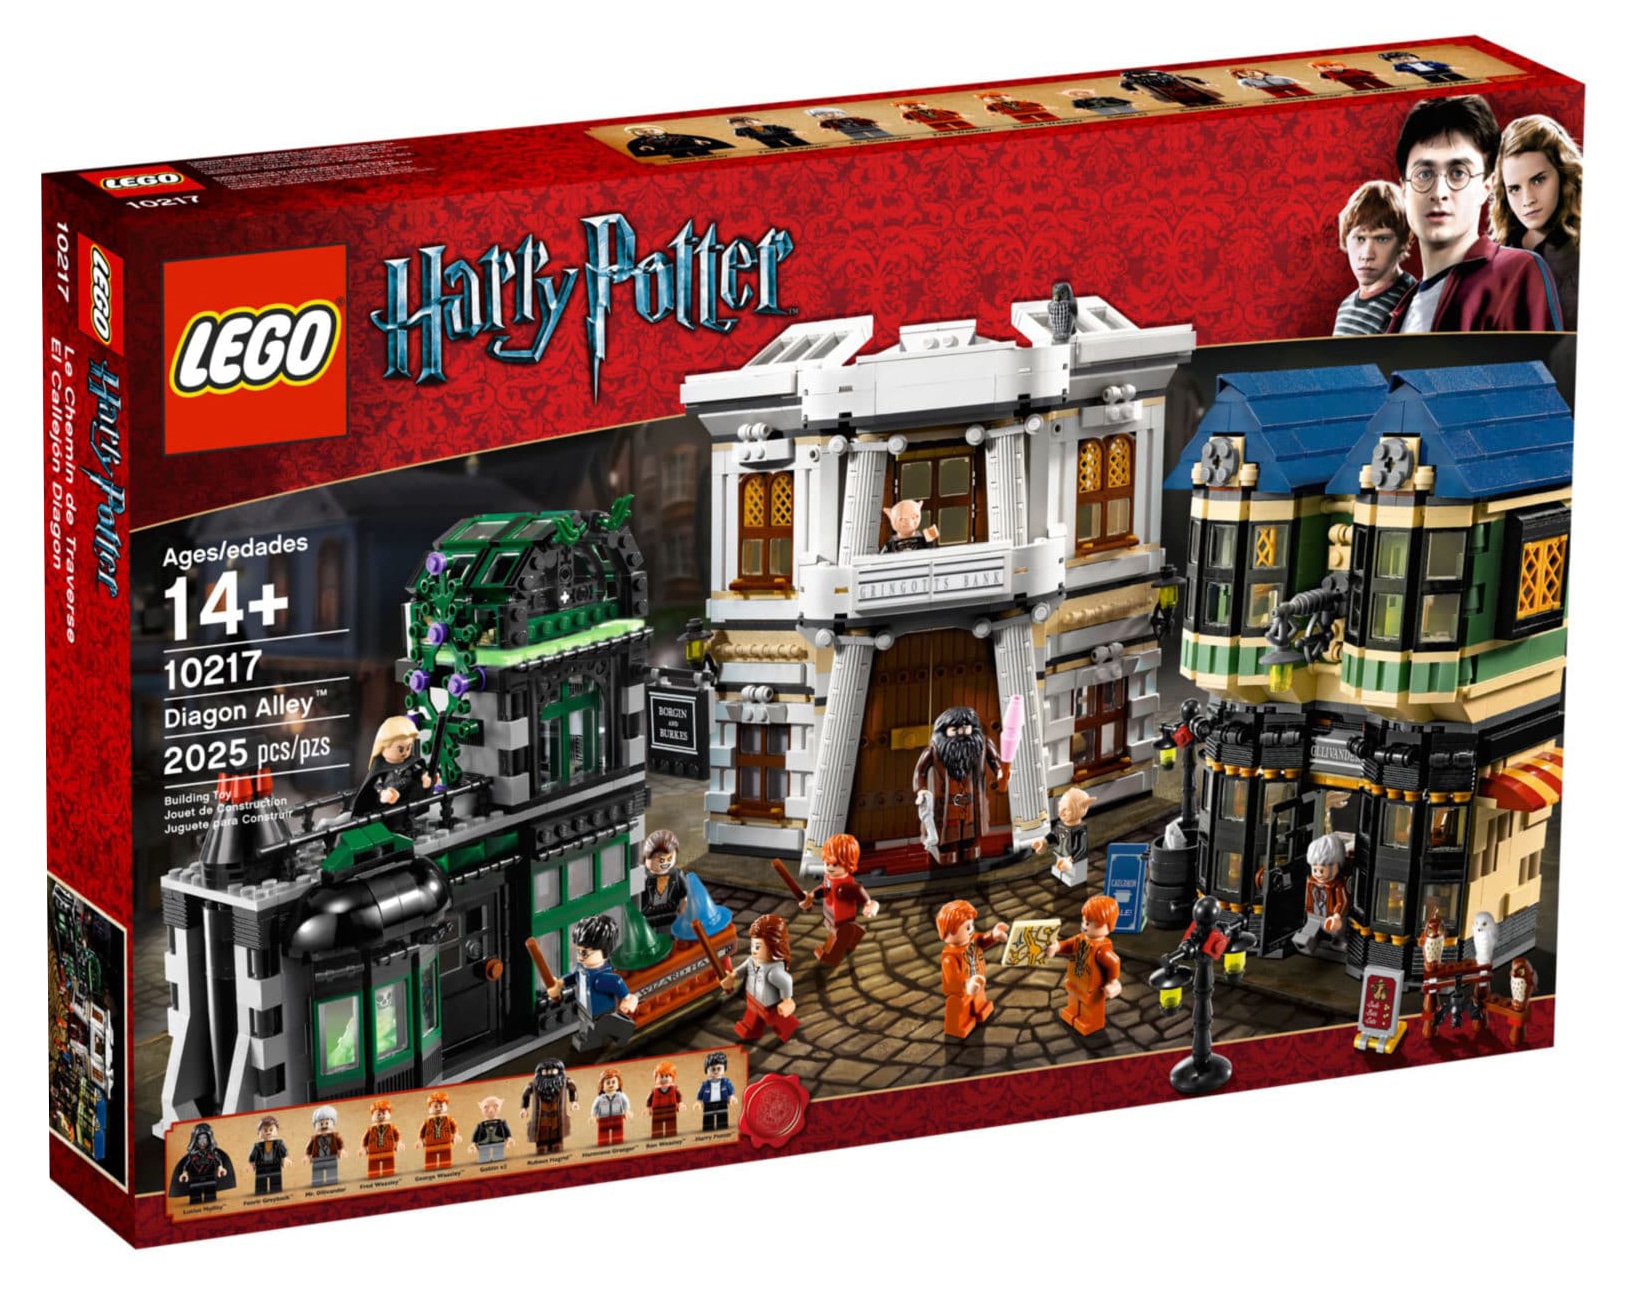 LEGO Harry Potter 10217 Diagon Alley